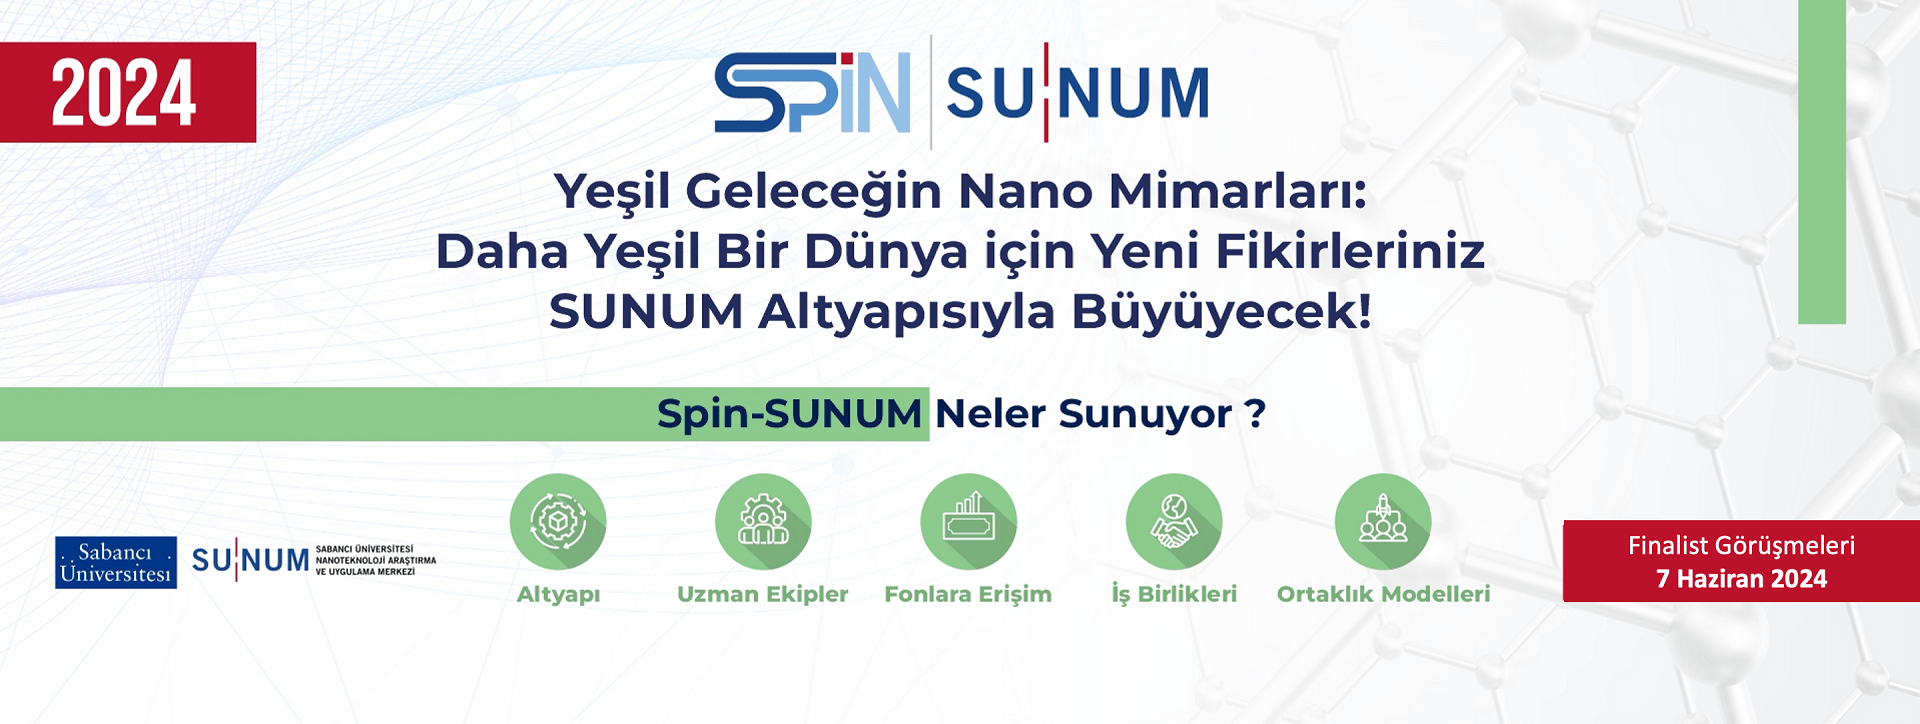 Spin-SUNUM, the 